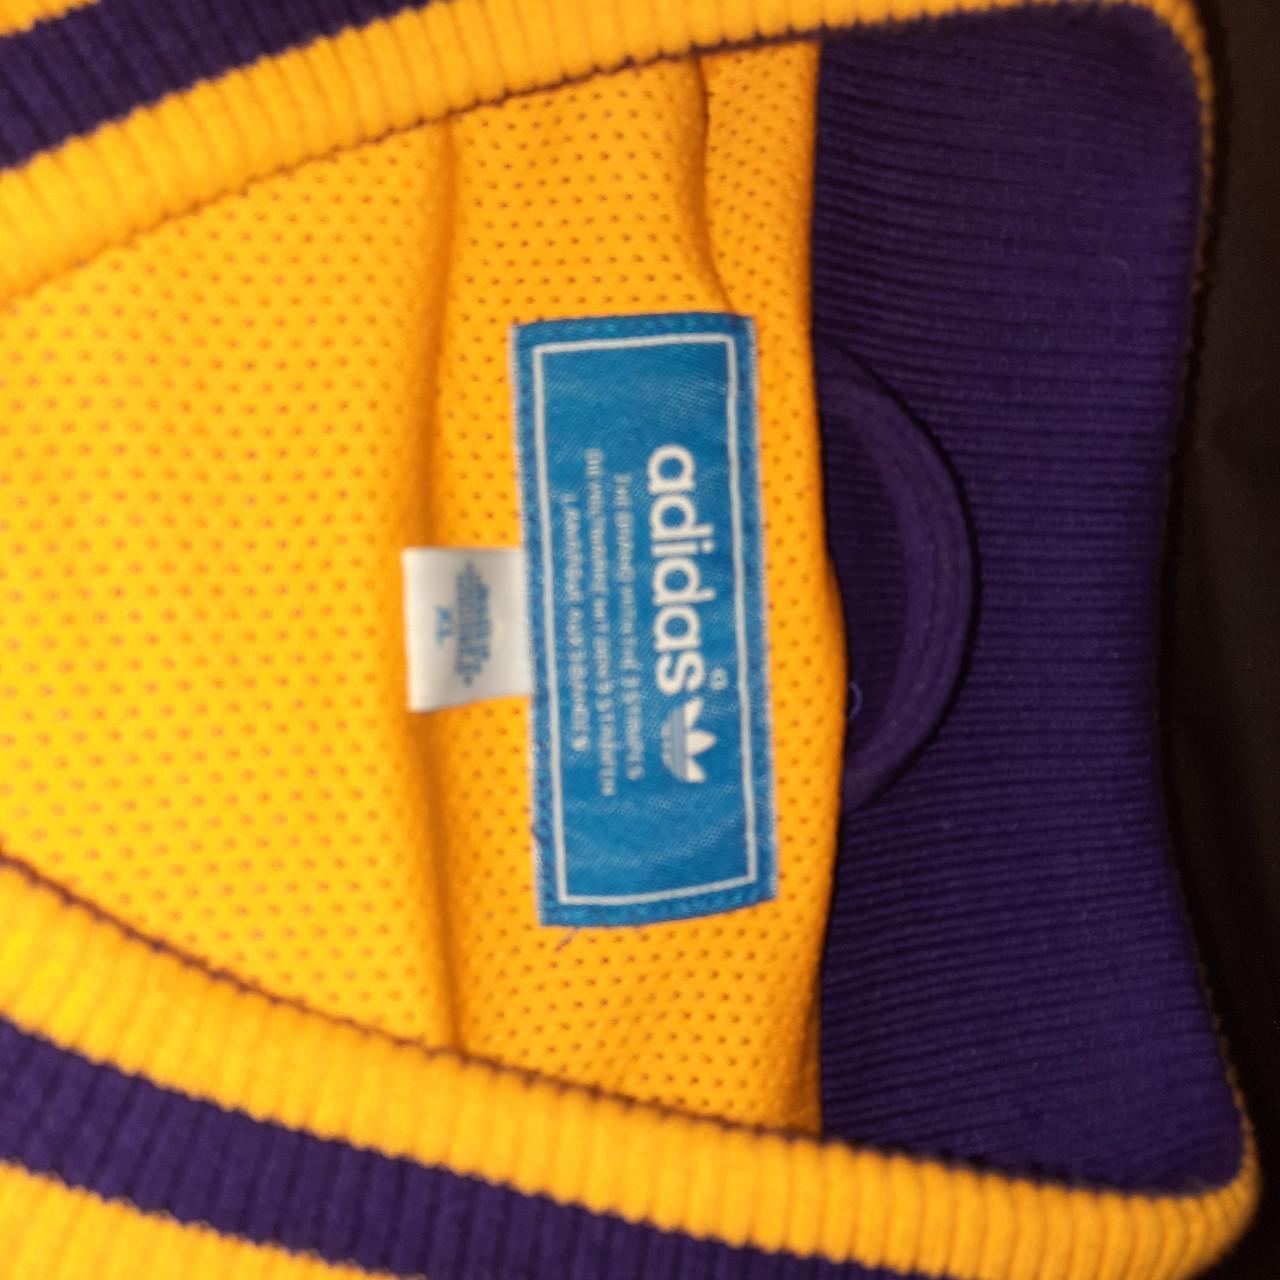 Vintage Adidas Lakers Hoodie!! 10/10 condition no - Depop